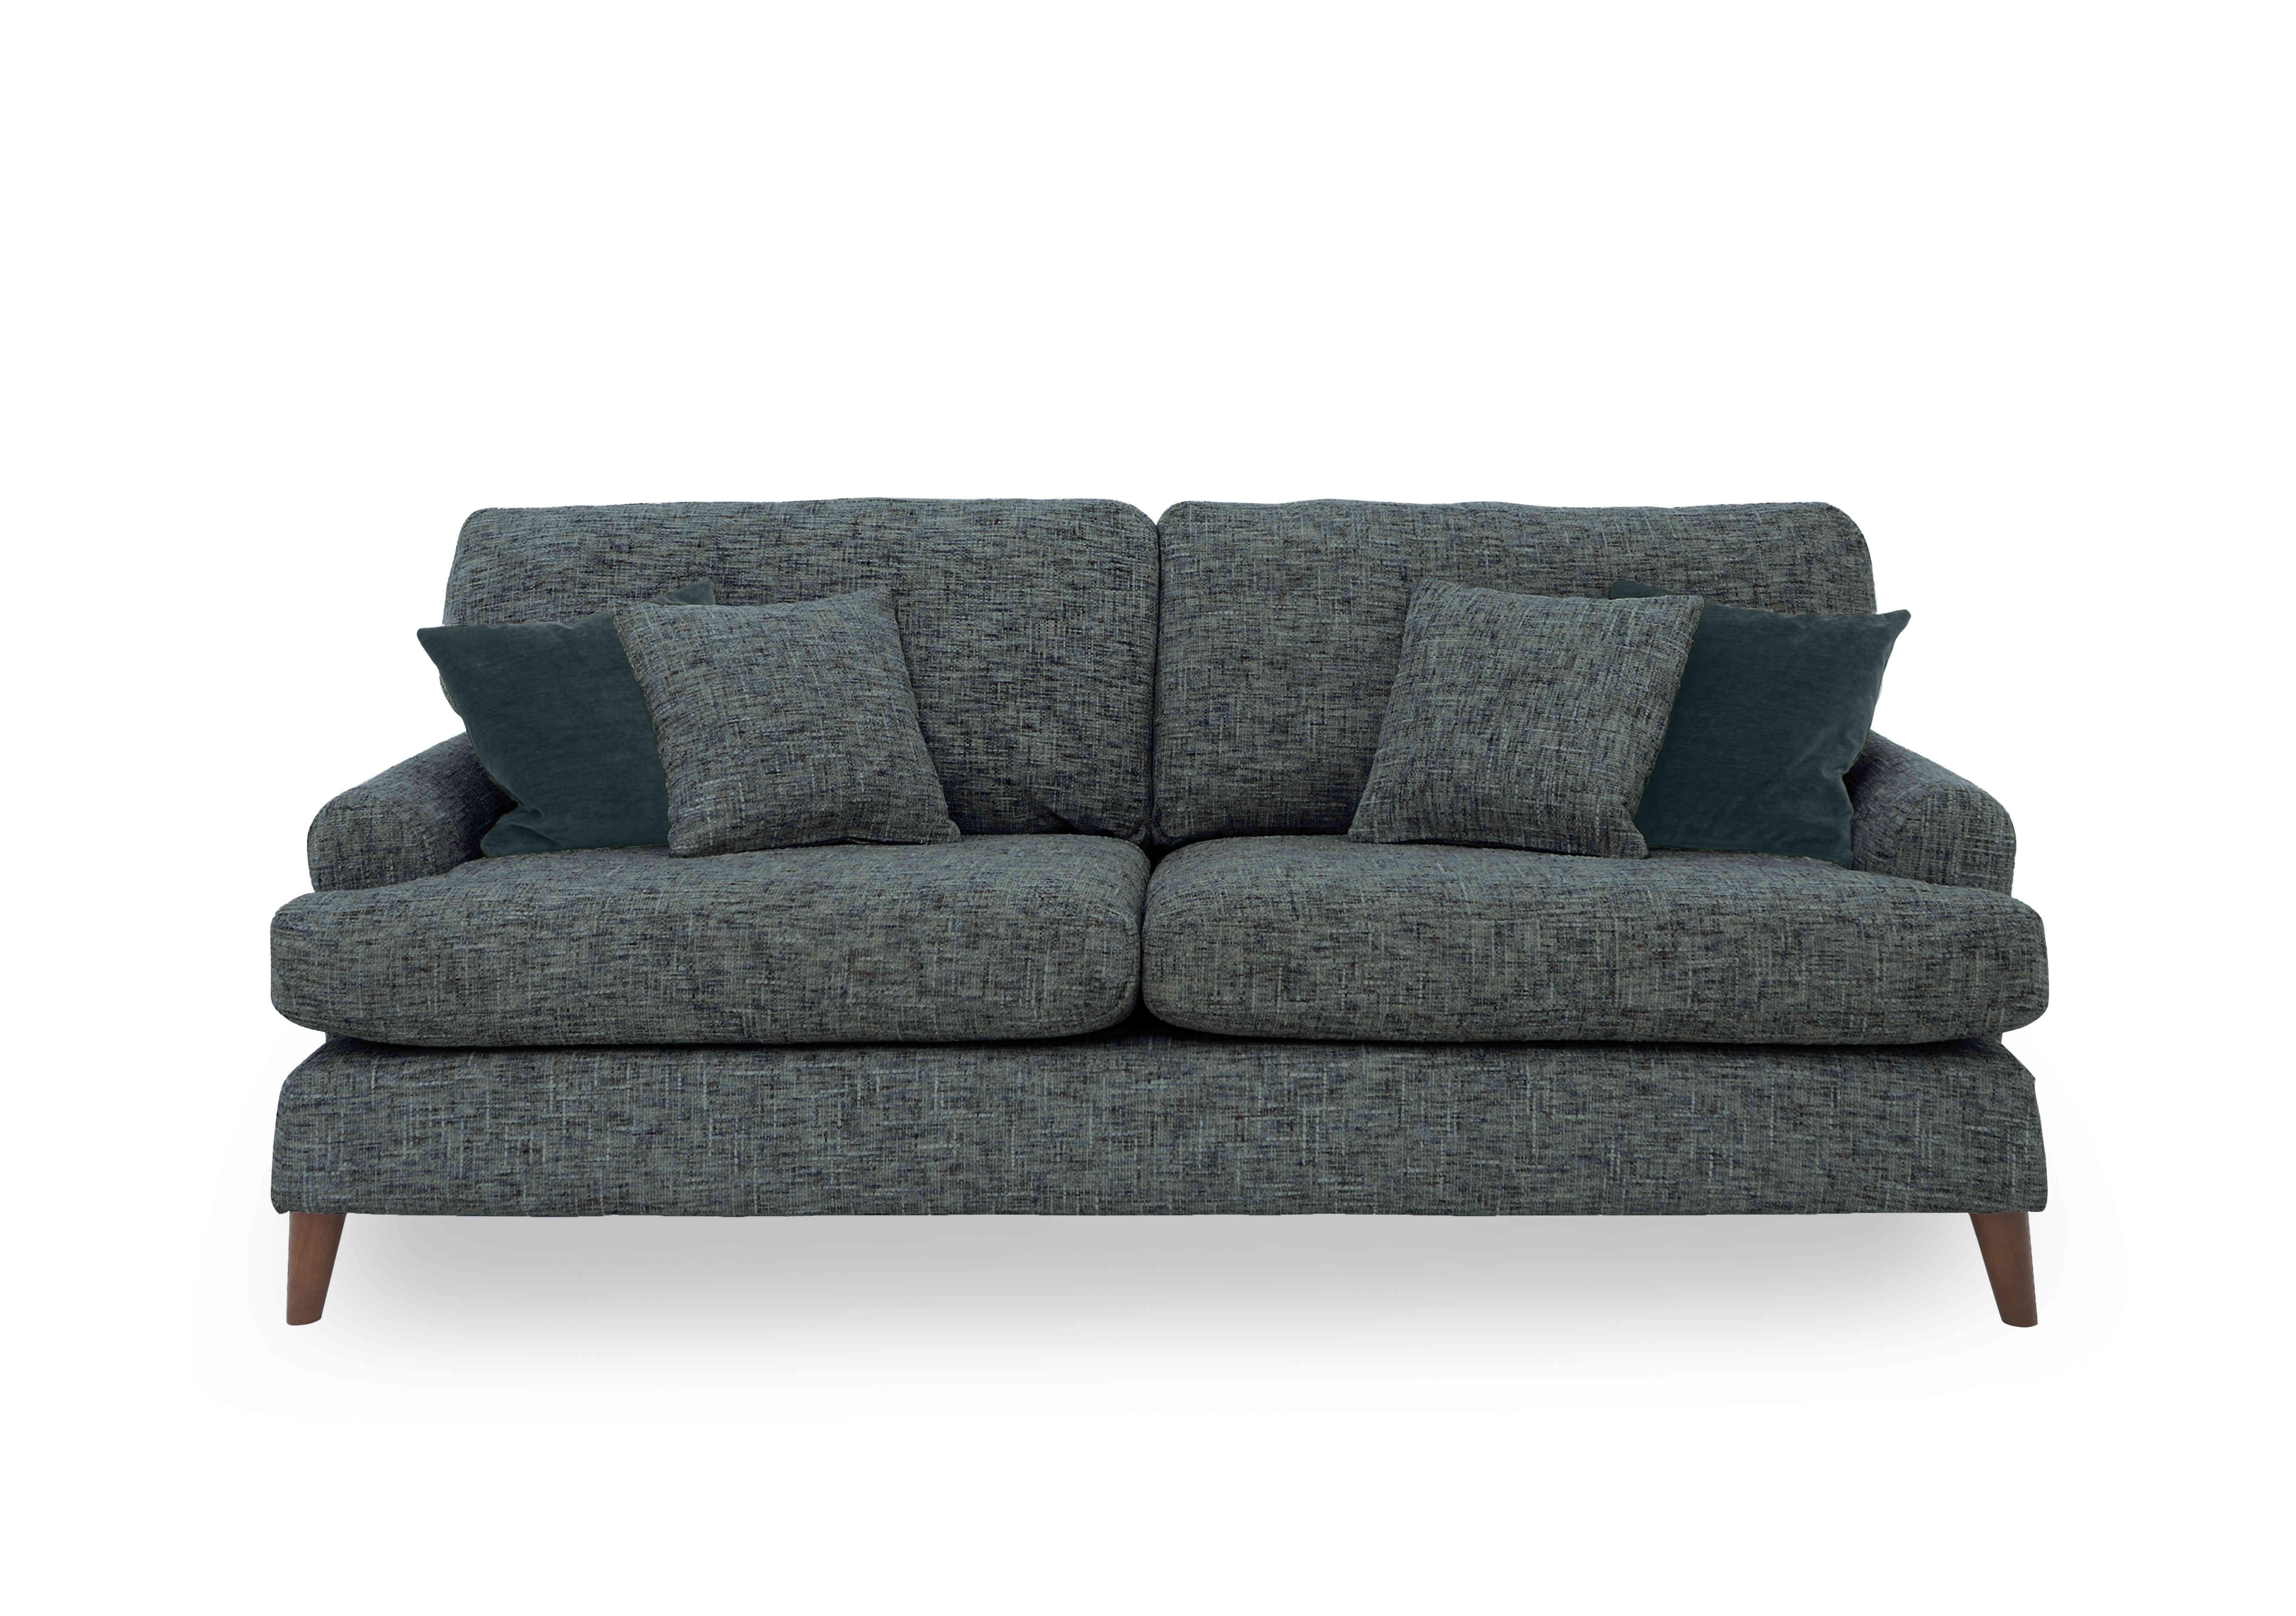 Jackson 4 Seater Fabric Sofa in Amazonite on Furniture Village